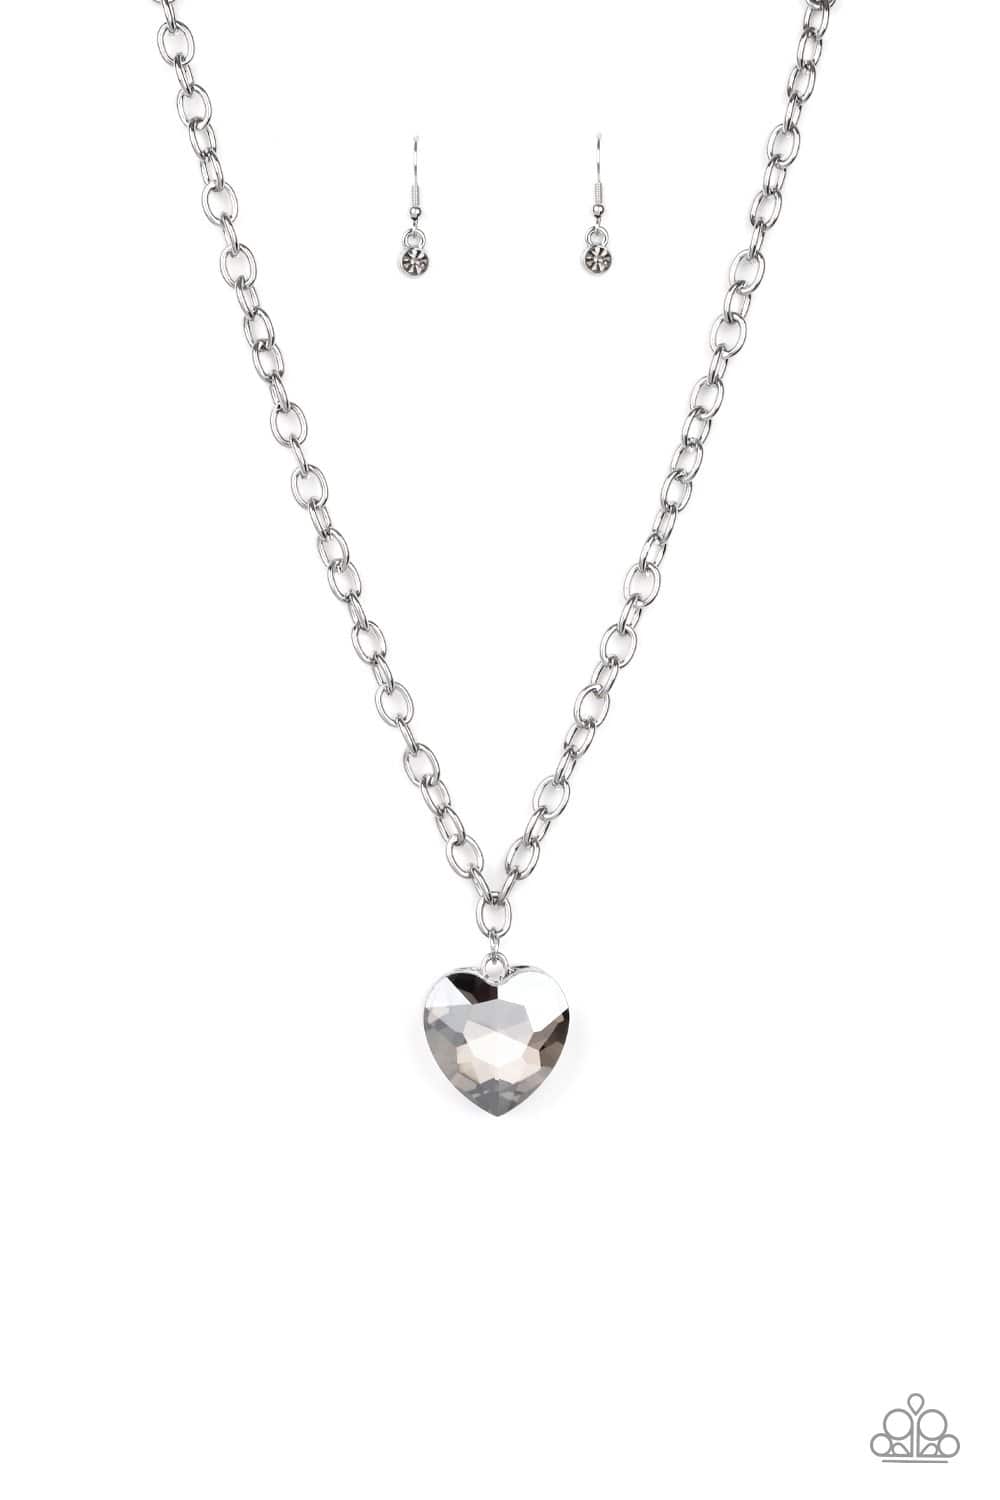 Flirtatiously Flashy - Silver Necklace - Paparazzi Accessories - GlaMarous Titi Jewels